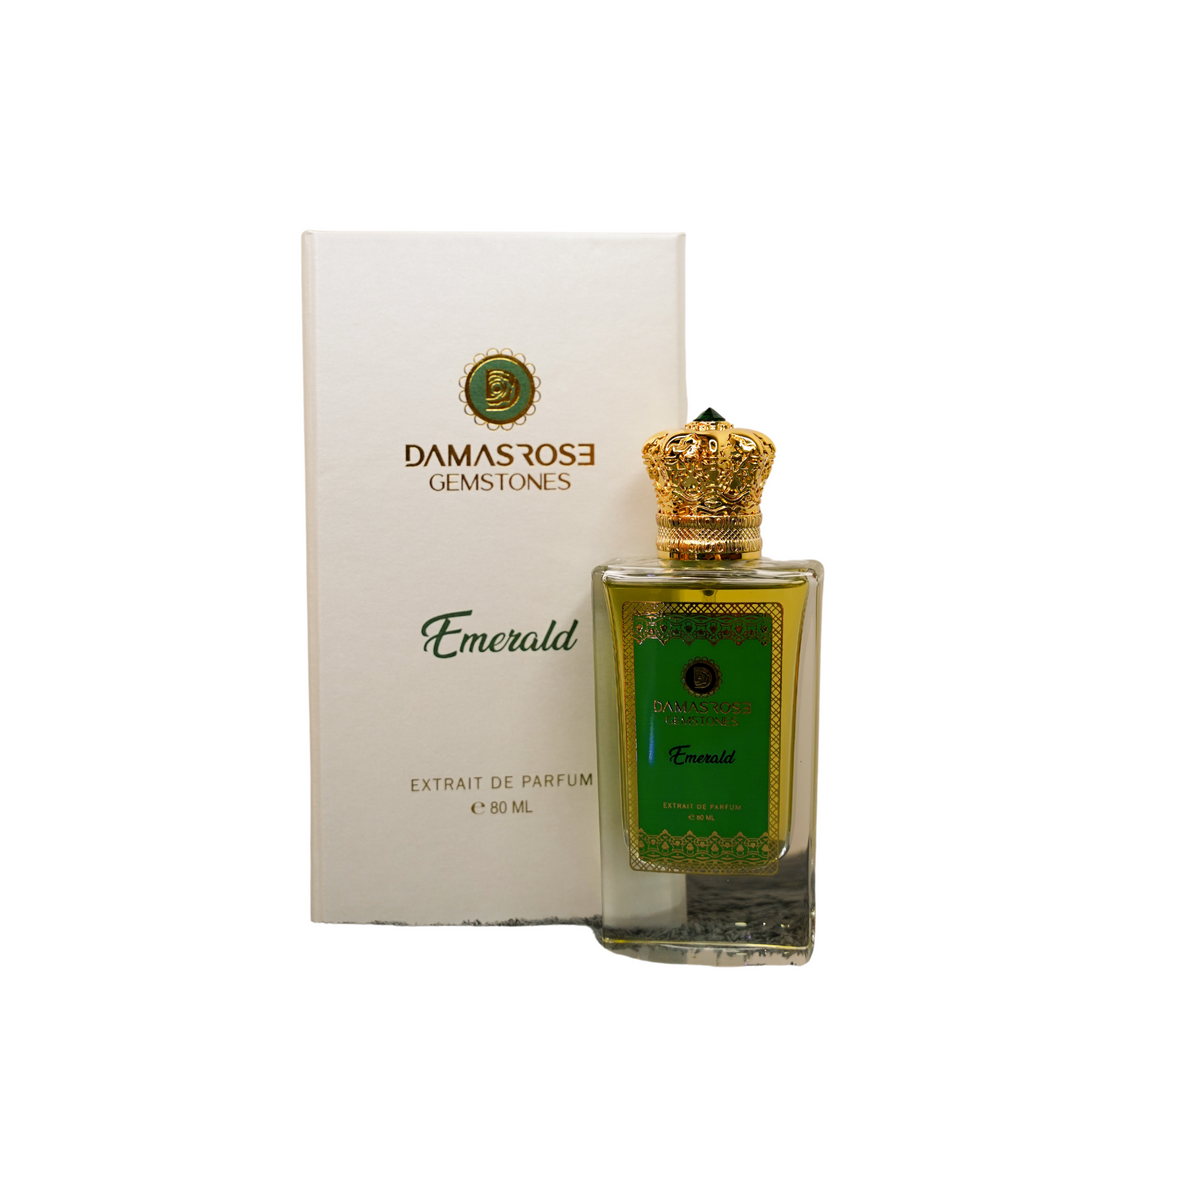 Gems rose Emerald Unisex Eau De Perfume 100ml by Damas Rose